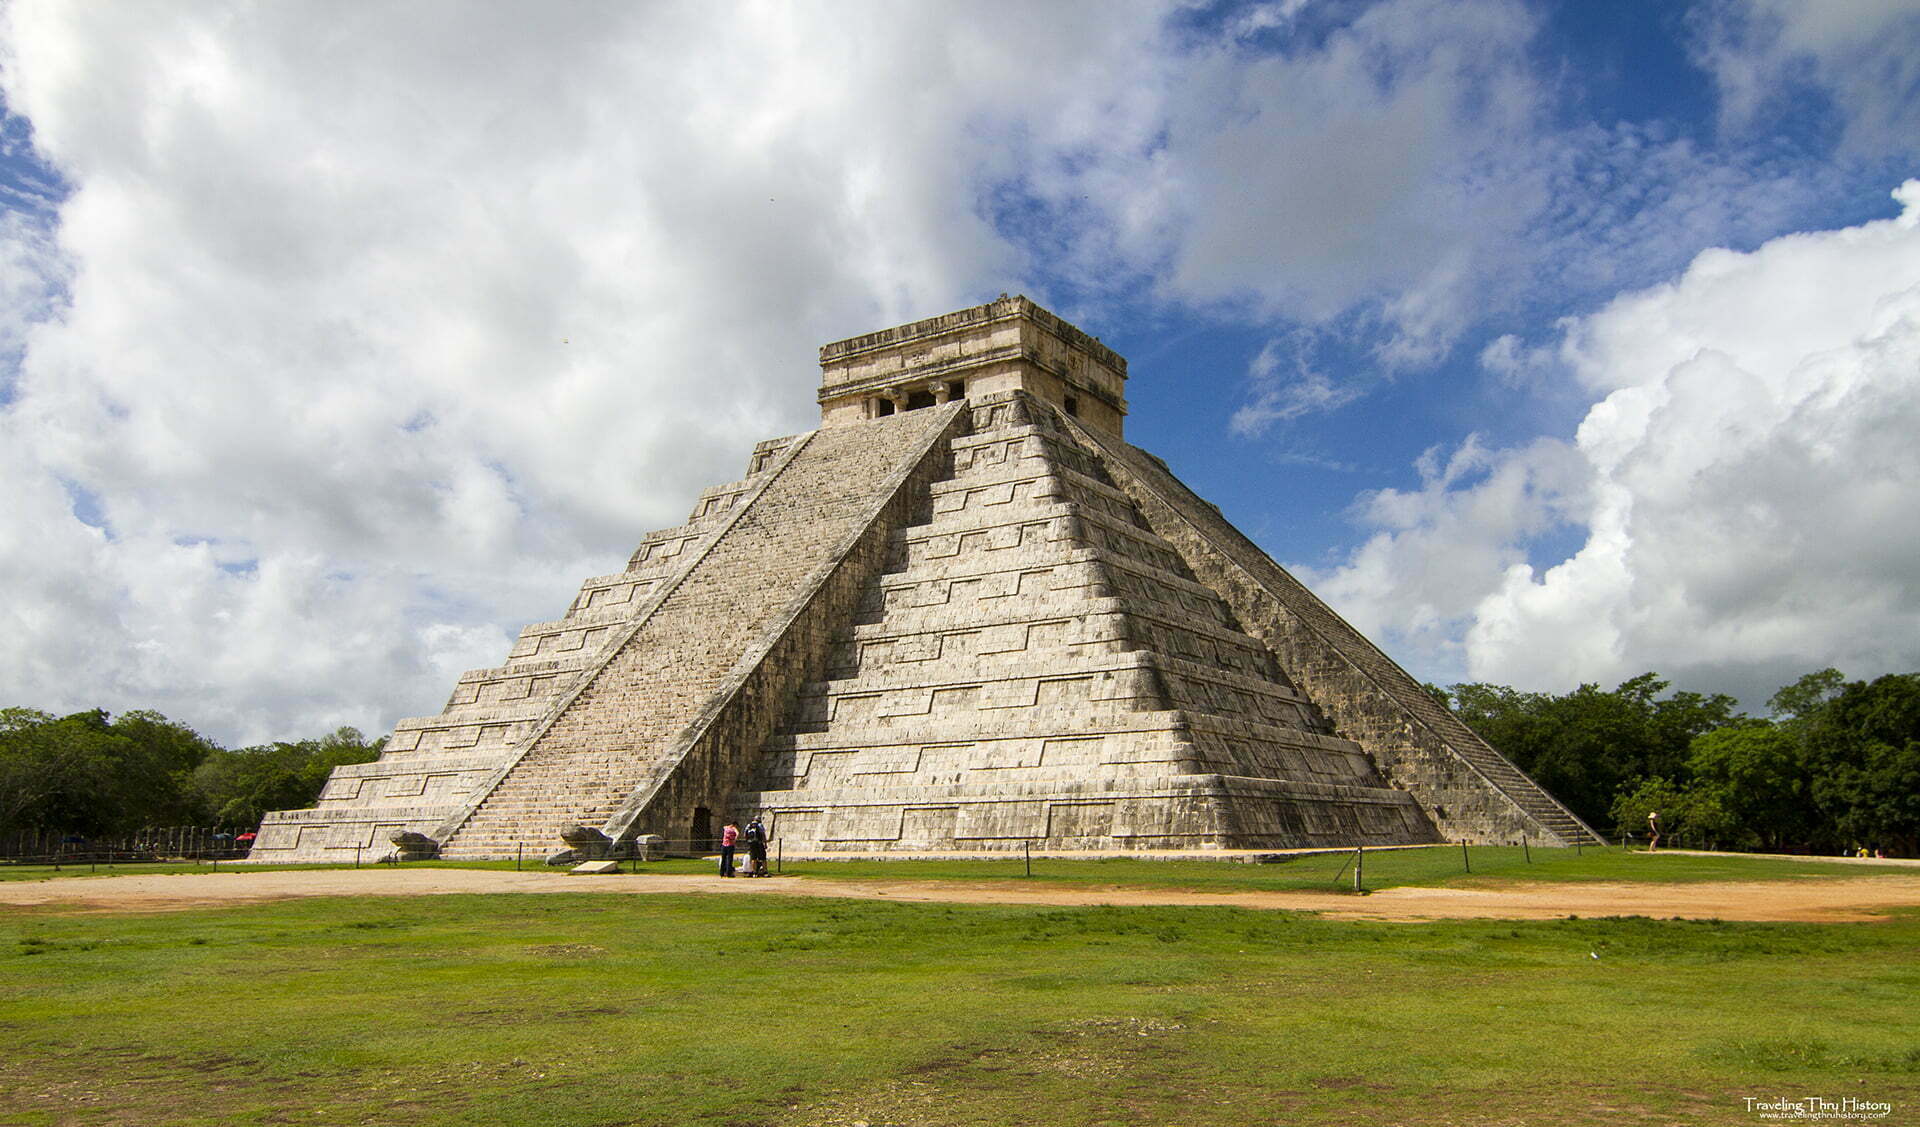 A stone pyramid 